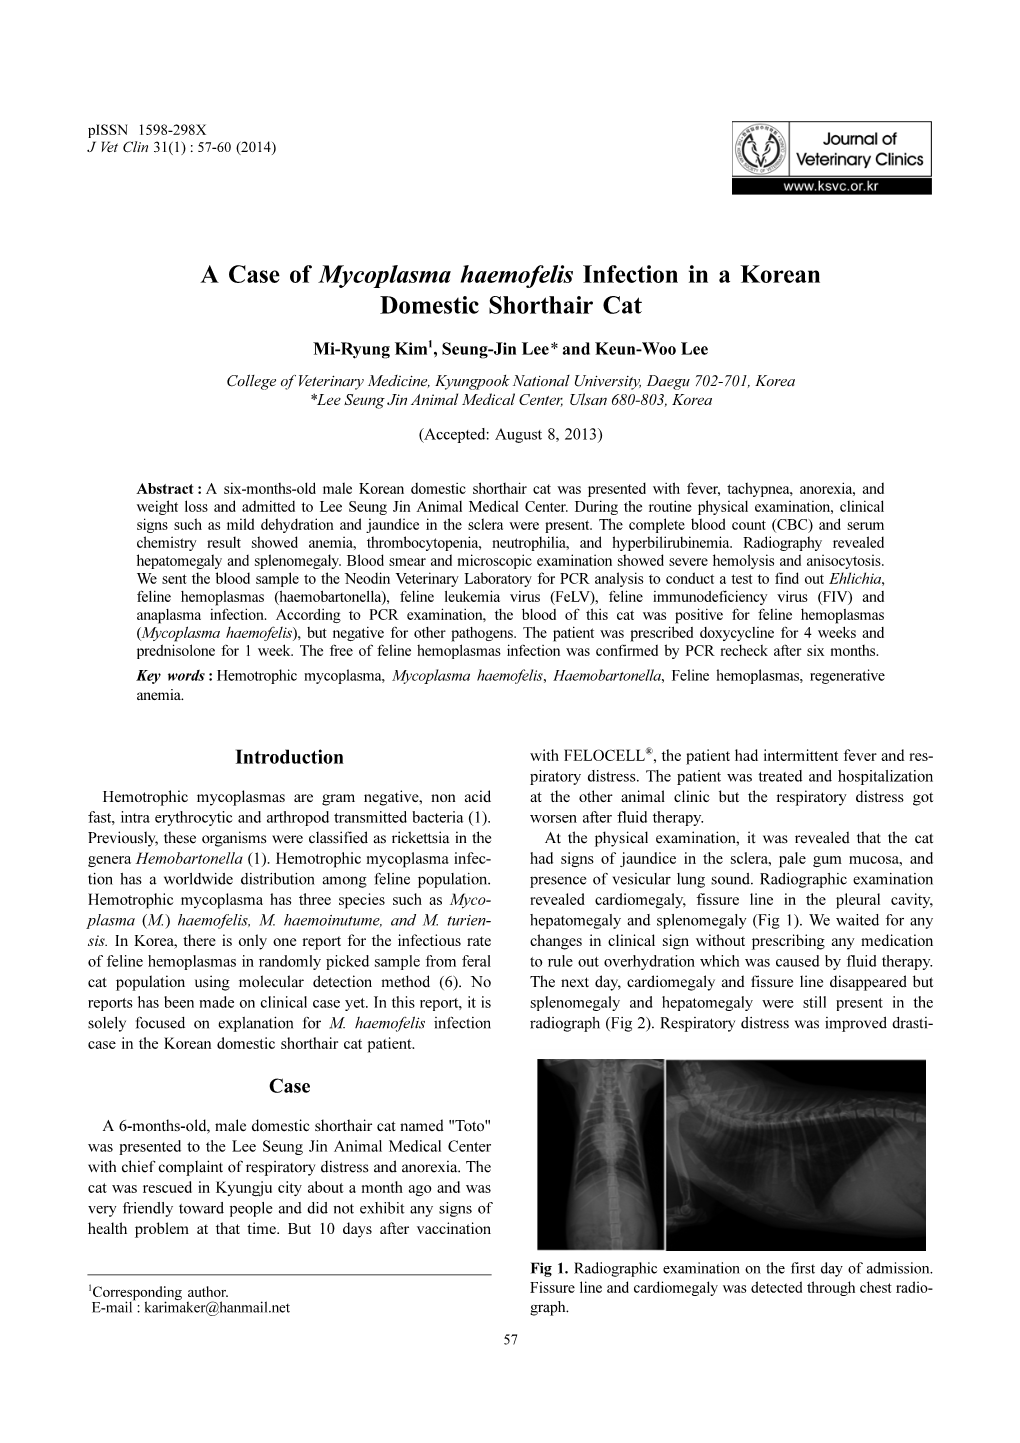 A Case of Mycoplasma Haemofelis Infection in a Korean Domestic Shorthair Cat